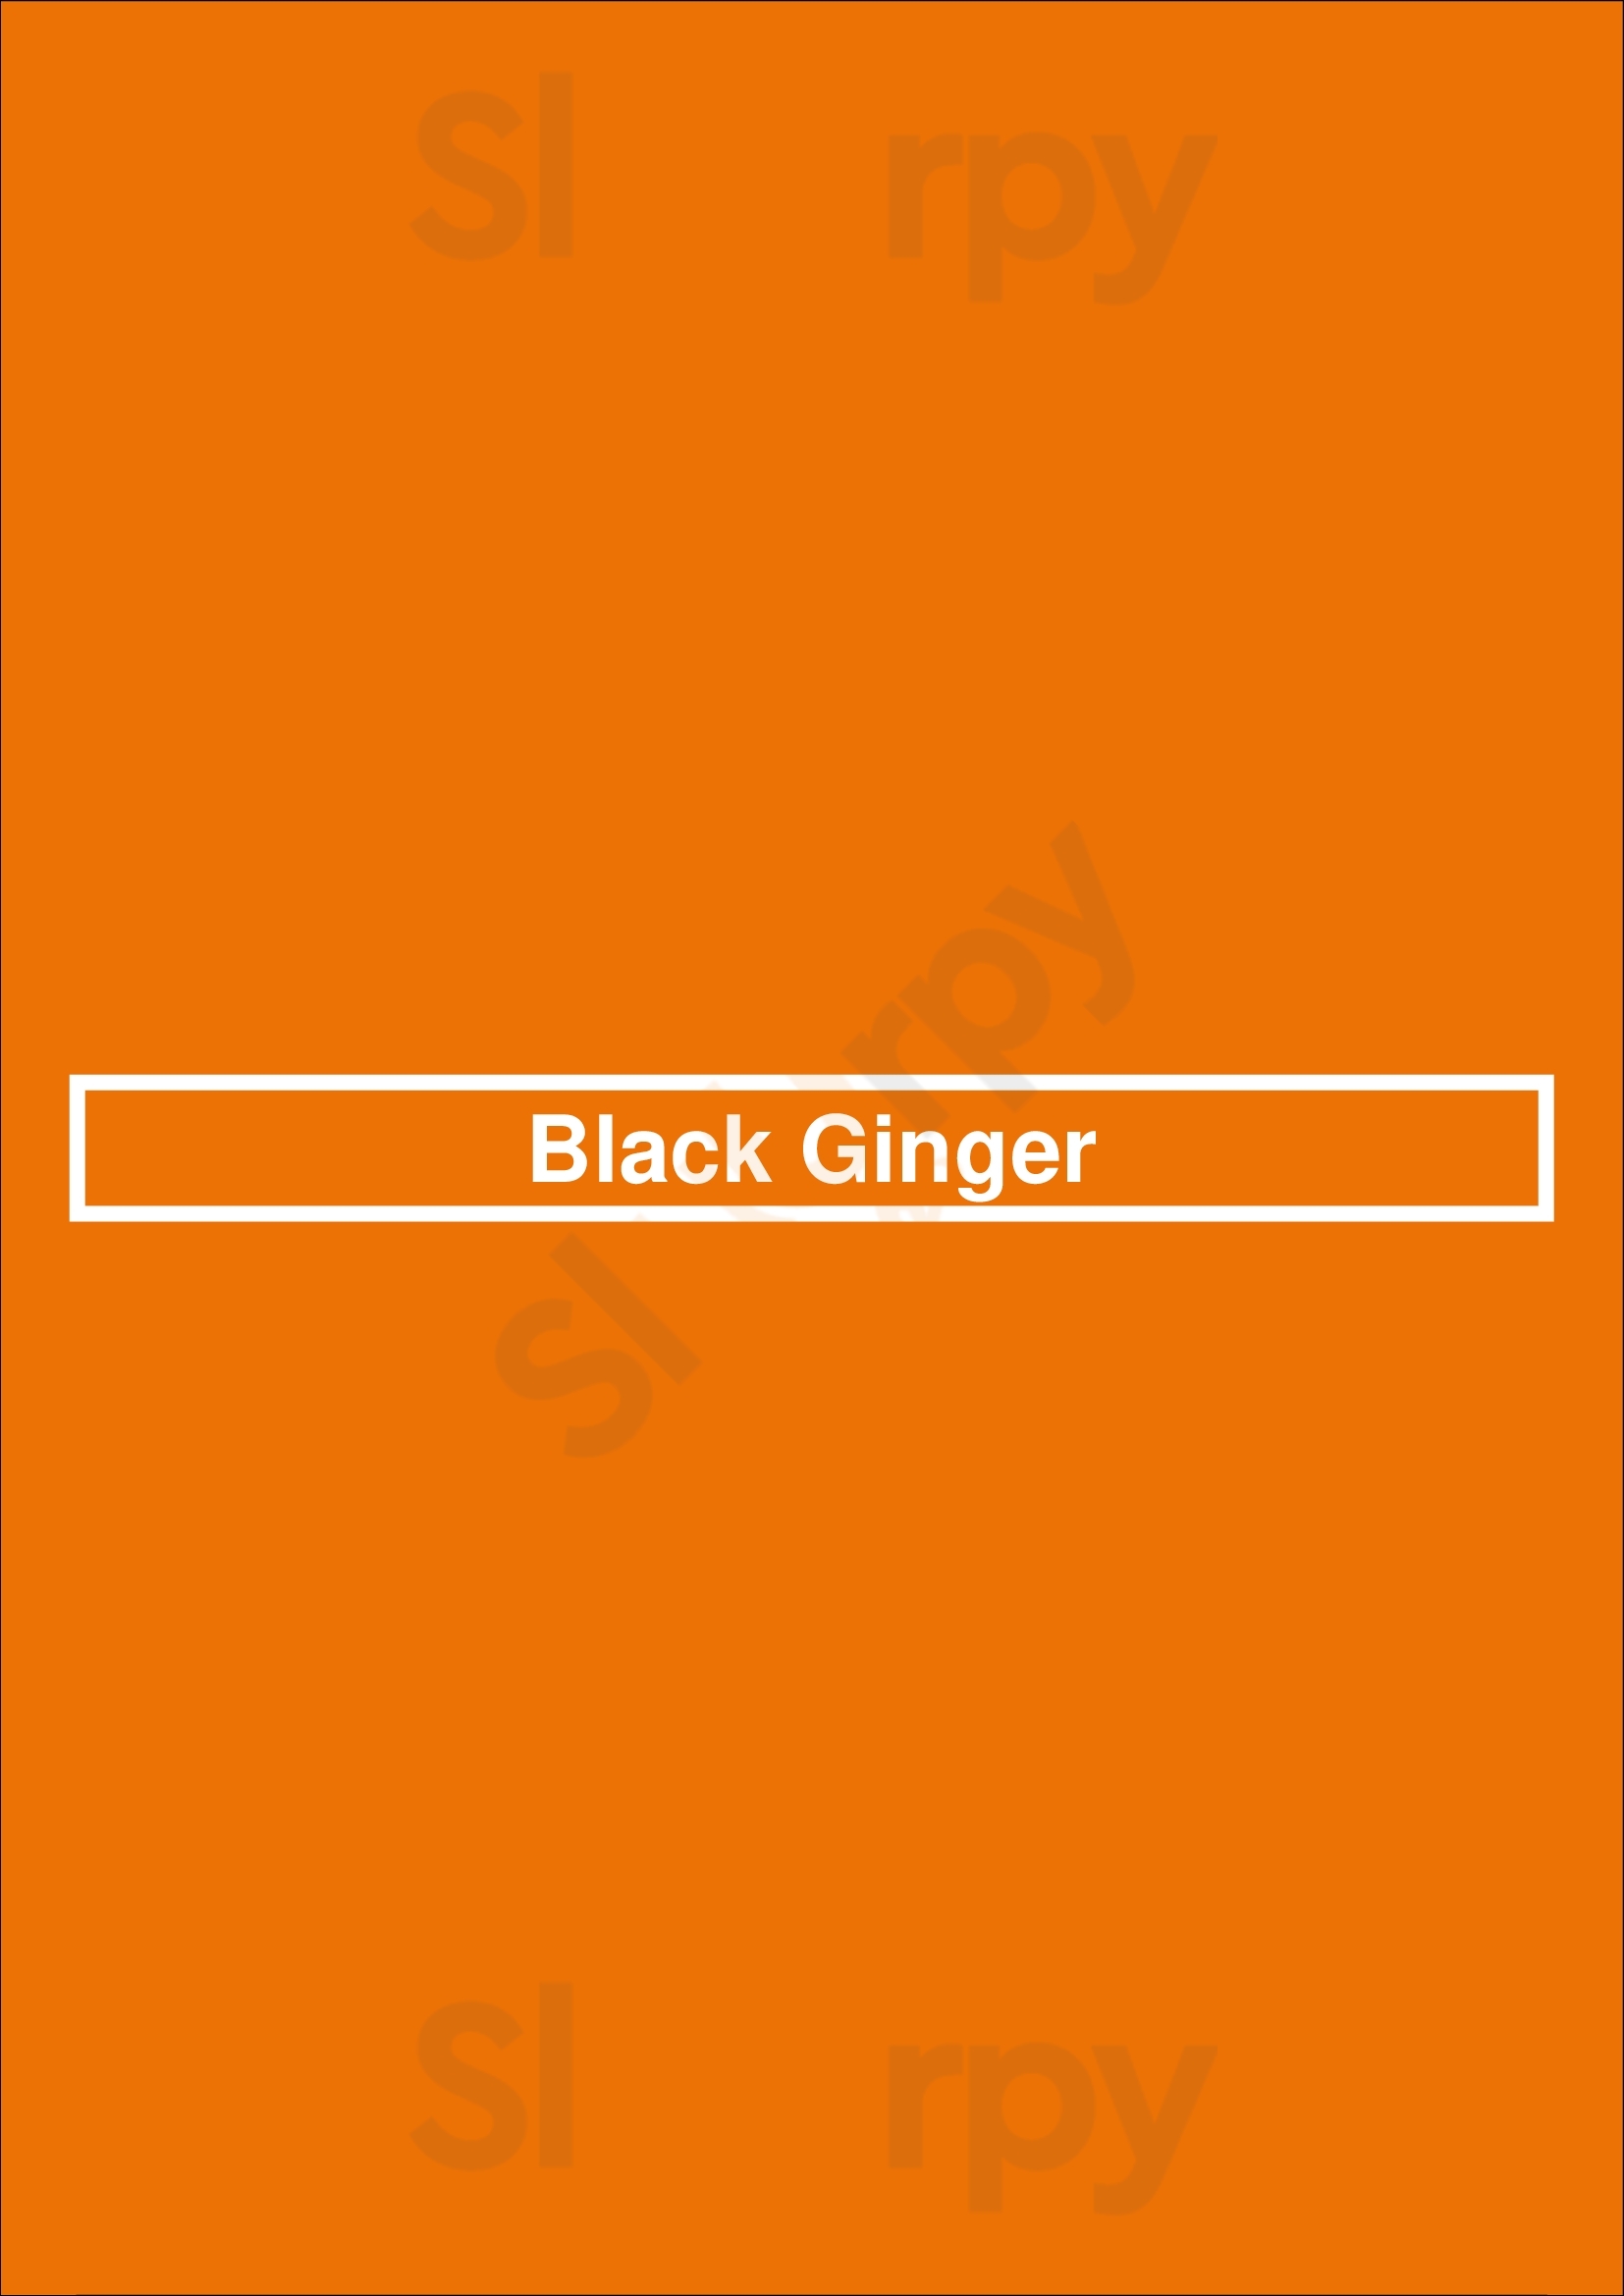 Black Ginger Newtown Menu - 1